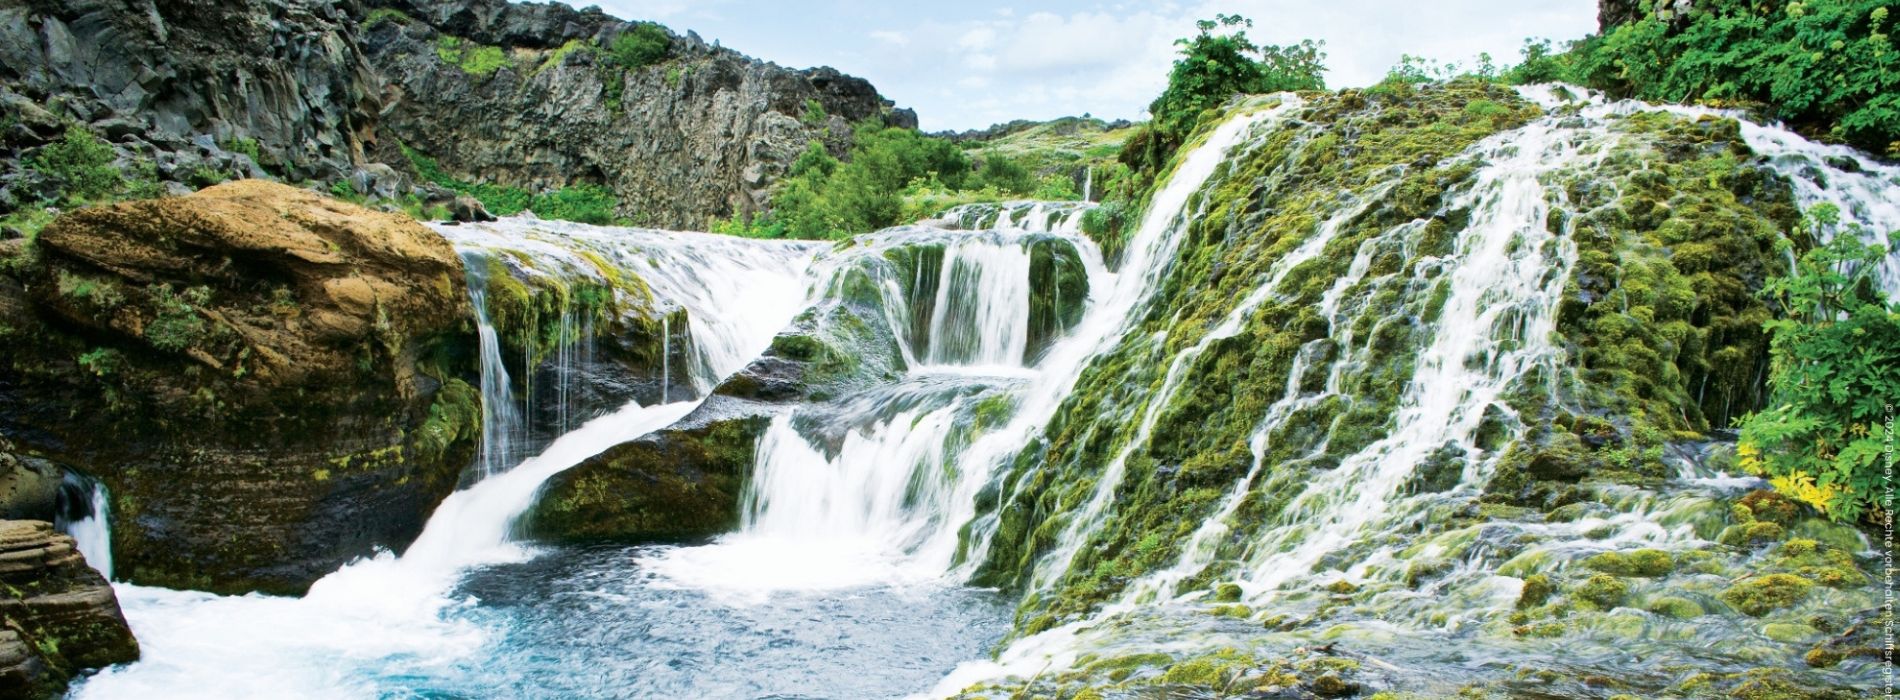 Hjalparfoss Waterfall